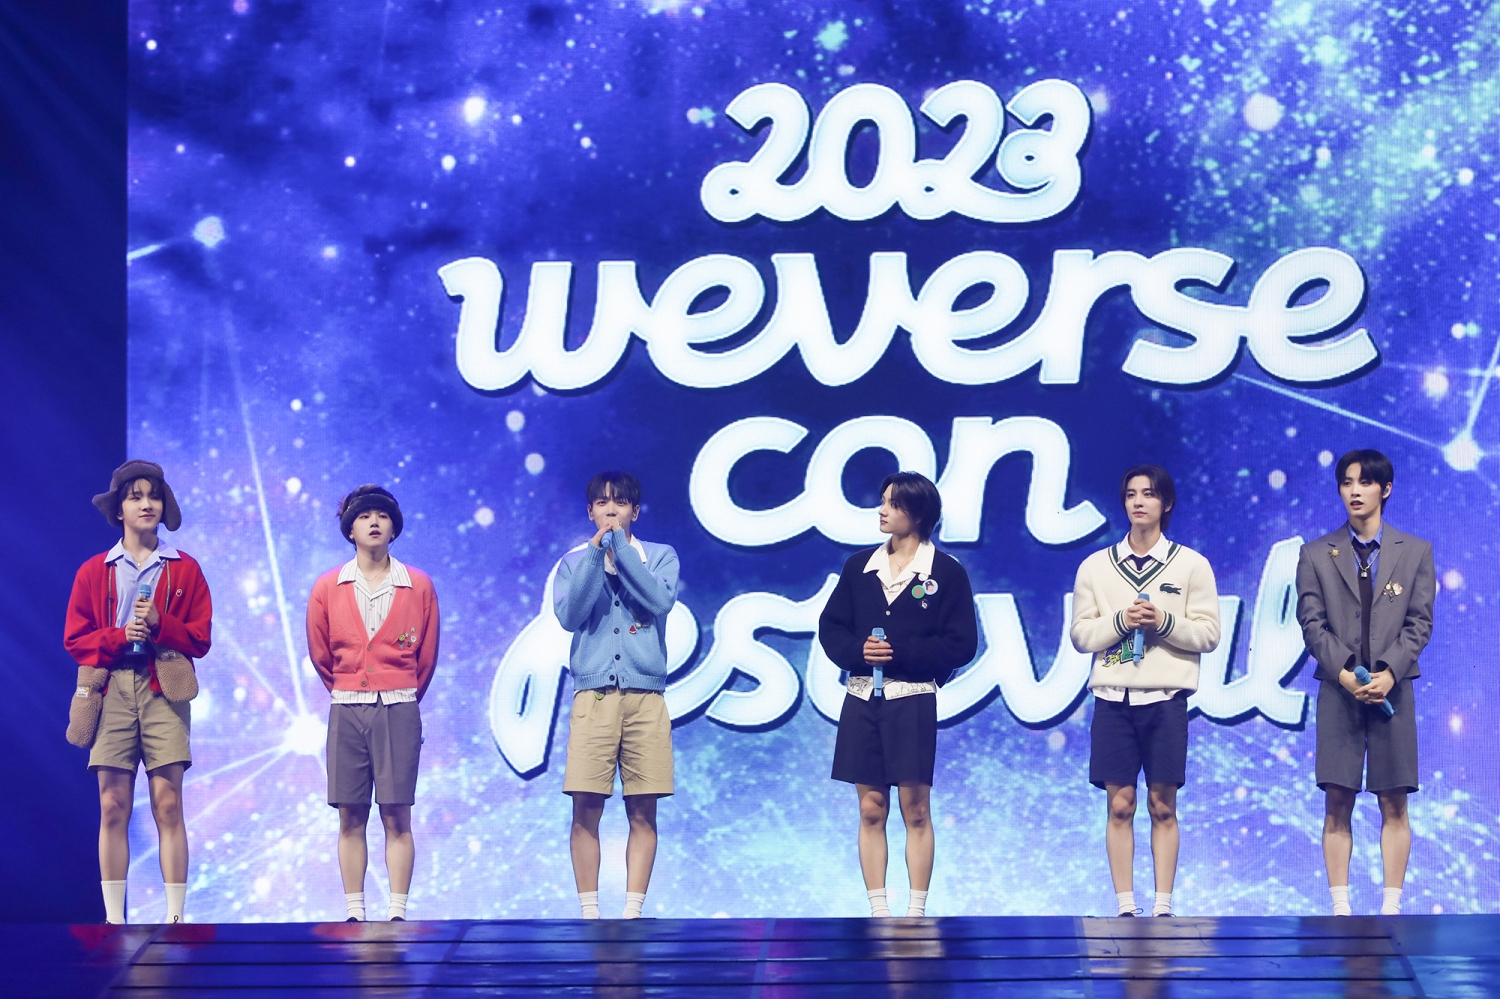 BOYNEXTDOOR 韓国大型音楽フェス「2023 Weverse Con Festival」初日公演にデビュー12日目で早くも登場